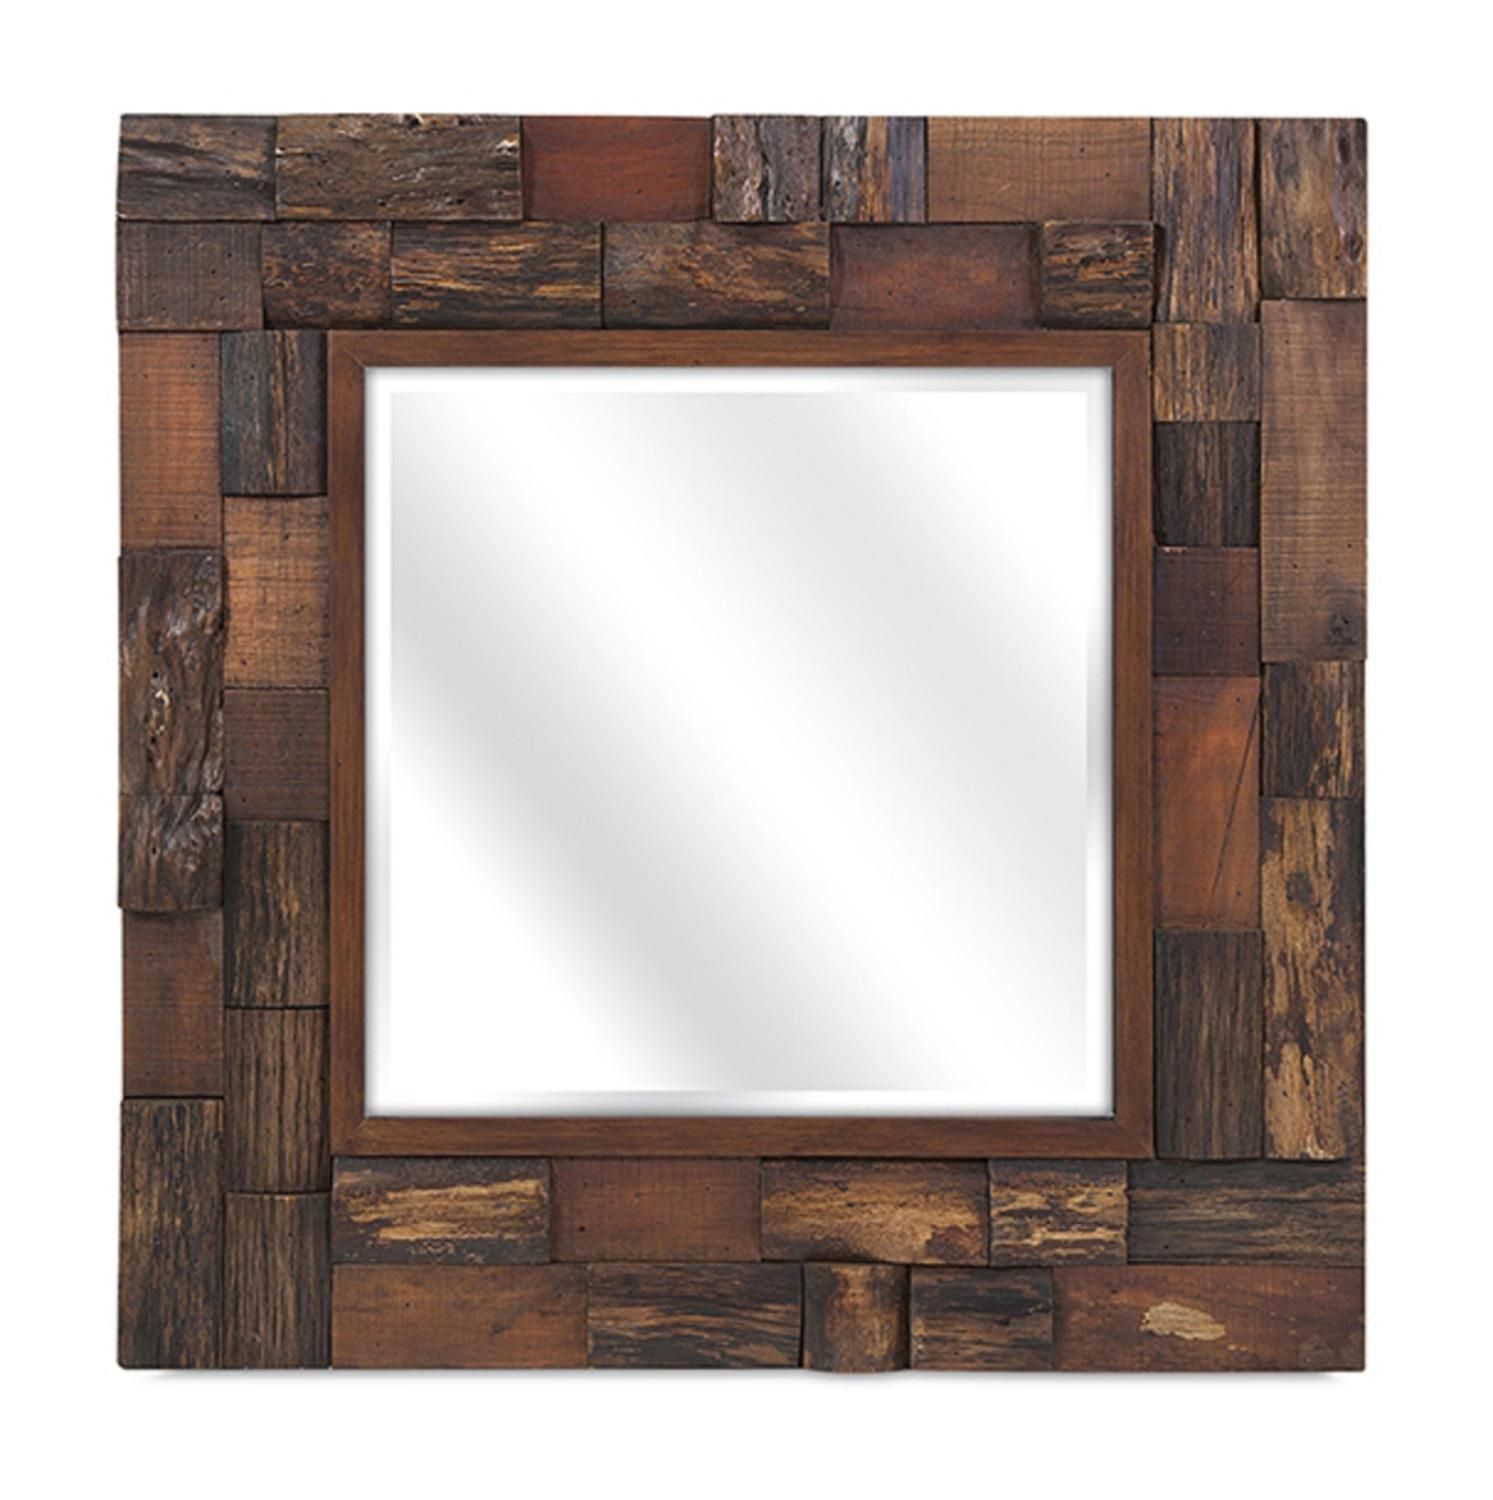 30" Rustic Masculine Baker Wood Finish Slat Square Beveled Wall Mirror Regarding Rustic Getaway Wood Wall Mirrors (View 3 of 15)